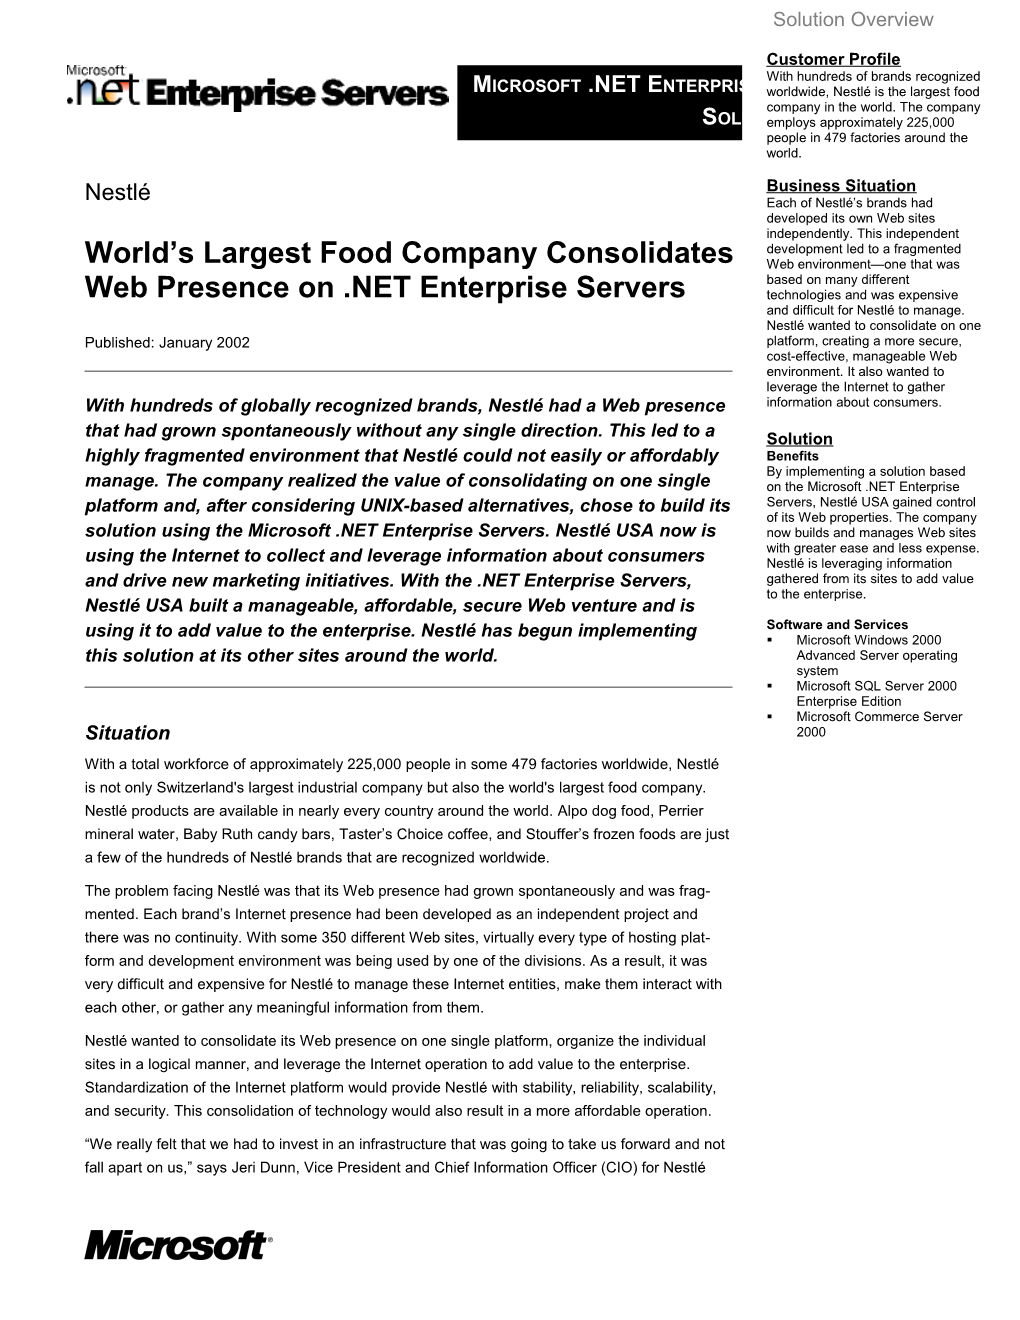 World S Largest Food Company Consolidates Web Presence on .NET Enterprise Servers